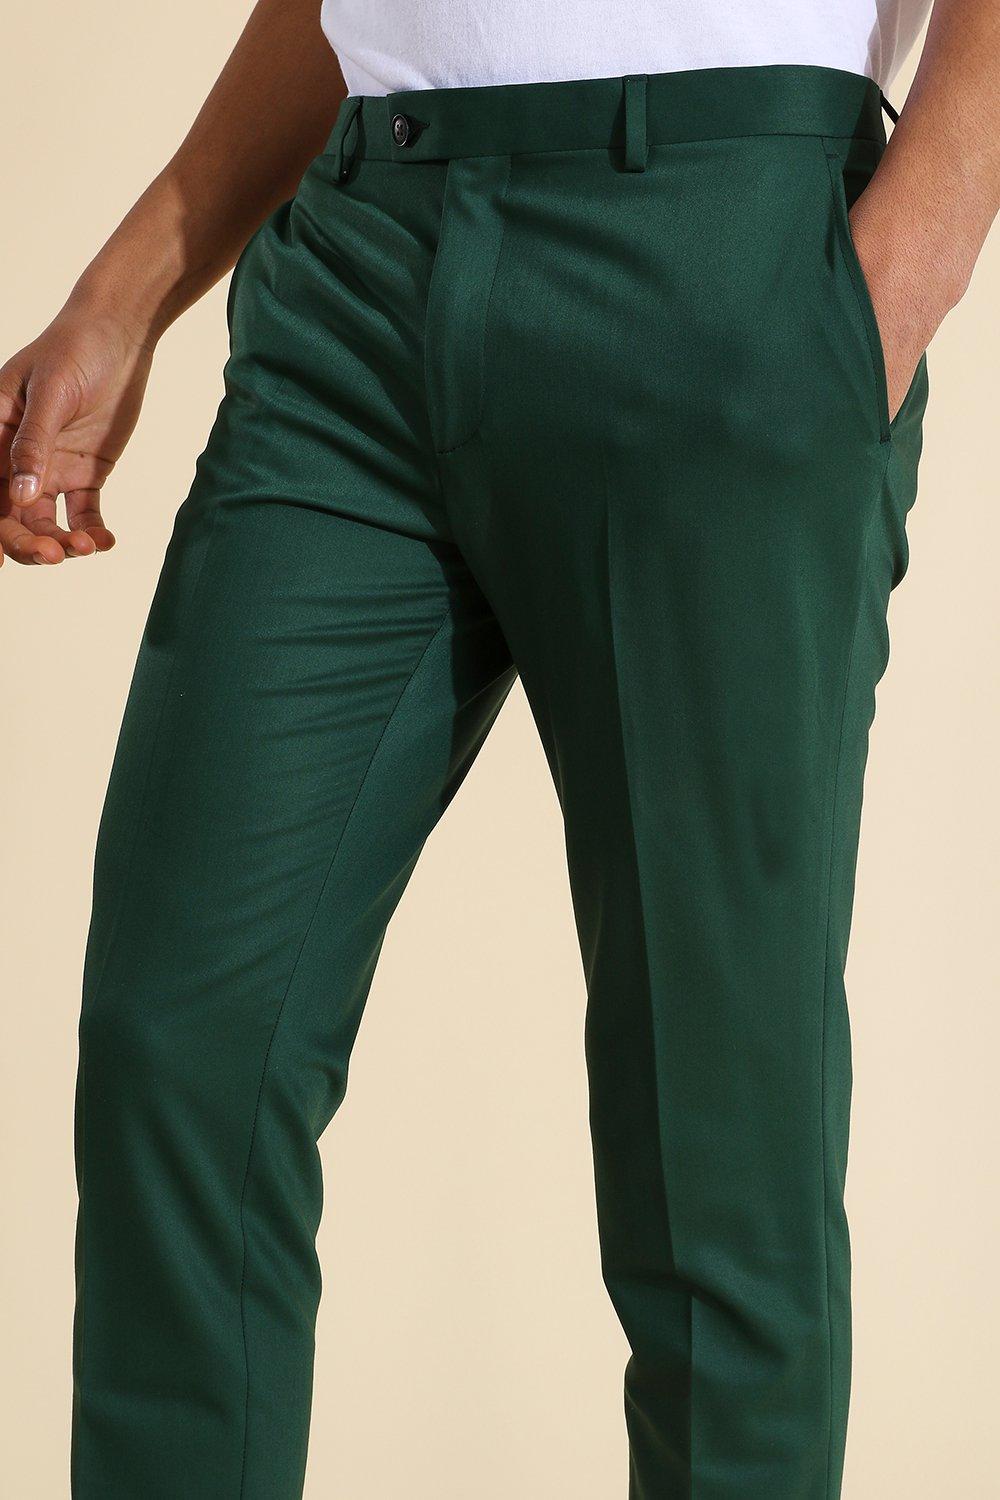 green dress pants